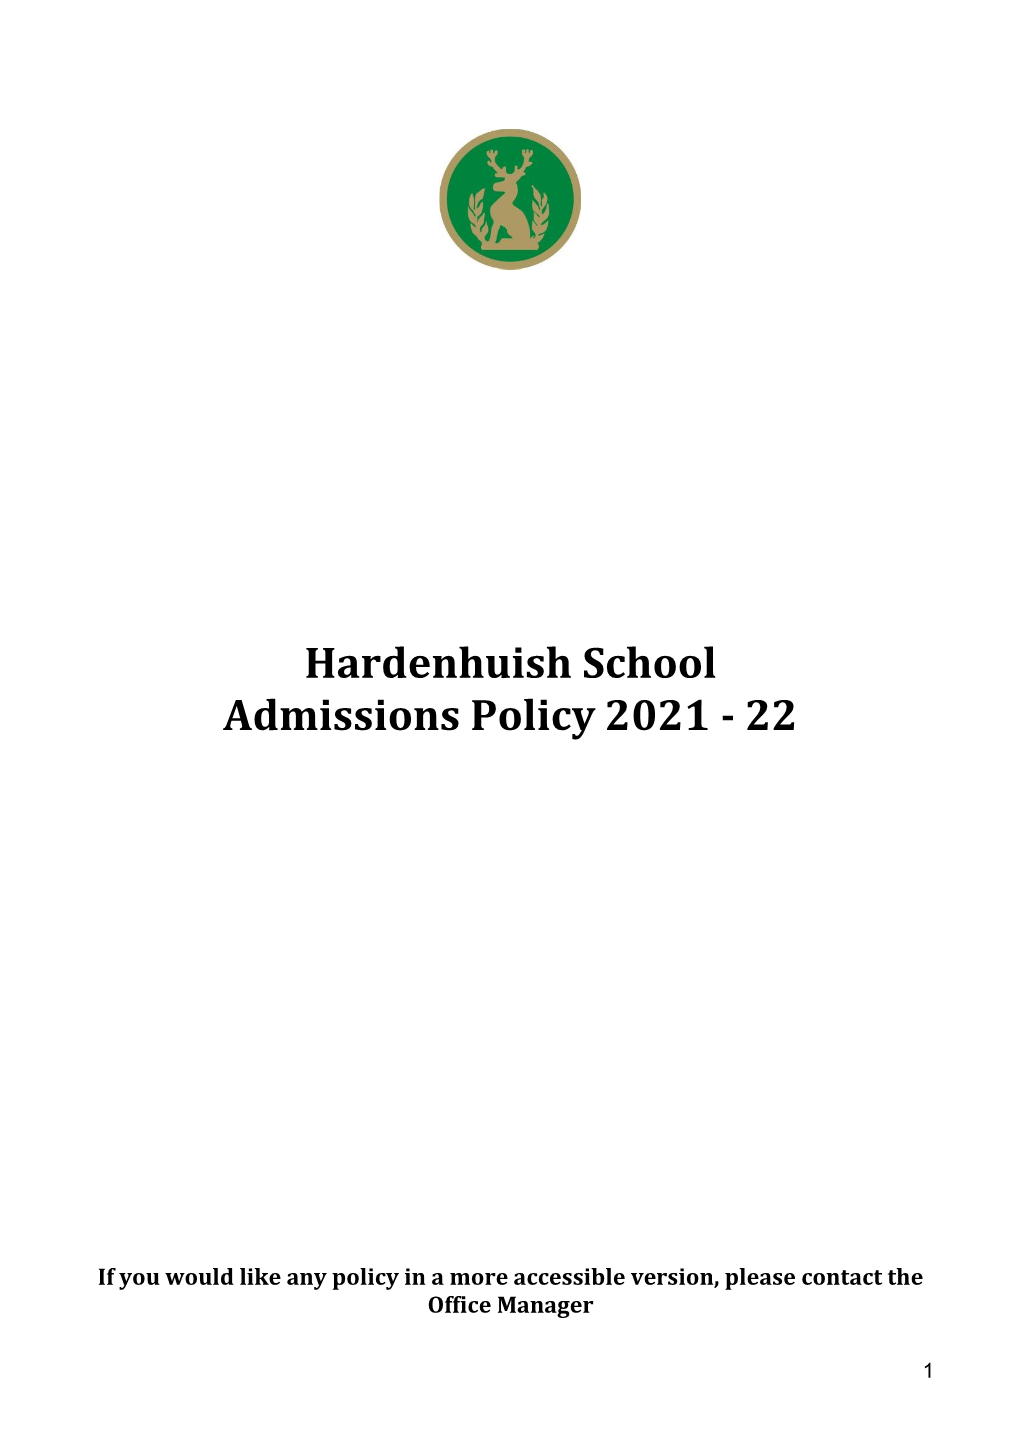 Hardenhuish School Admissions Policy 2021 - 22